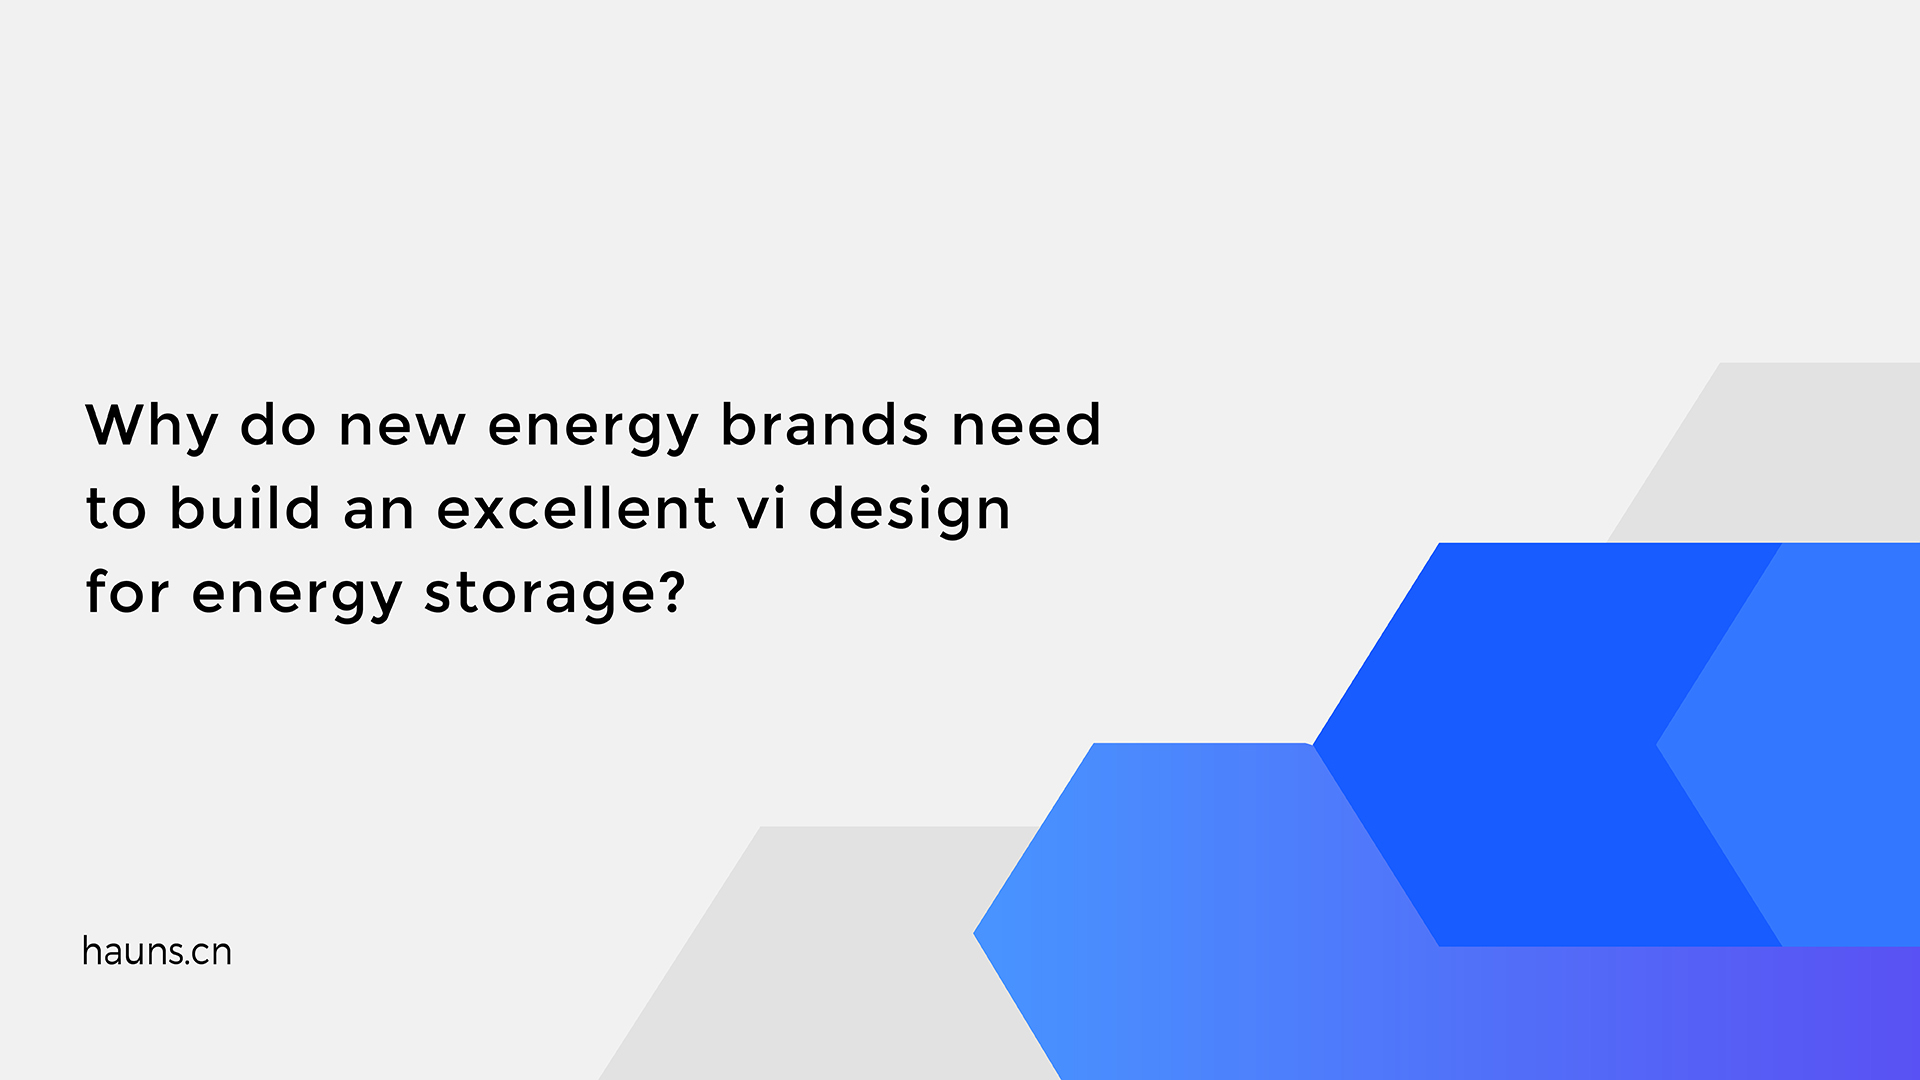 How should energy storage enterprises choose energy visual brand identity companies?